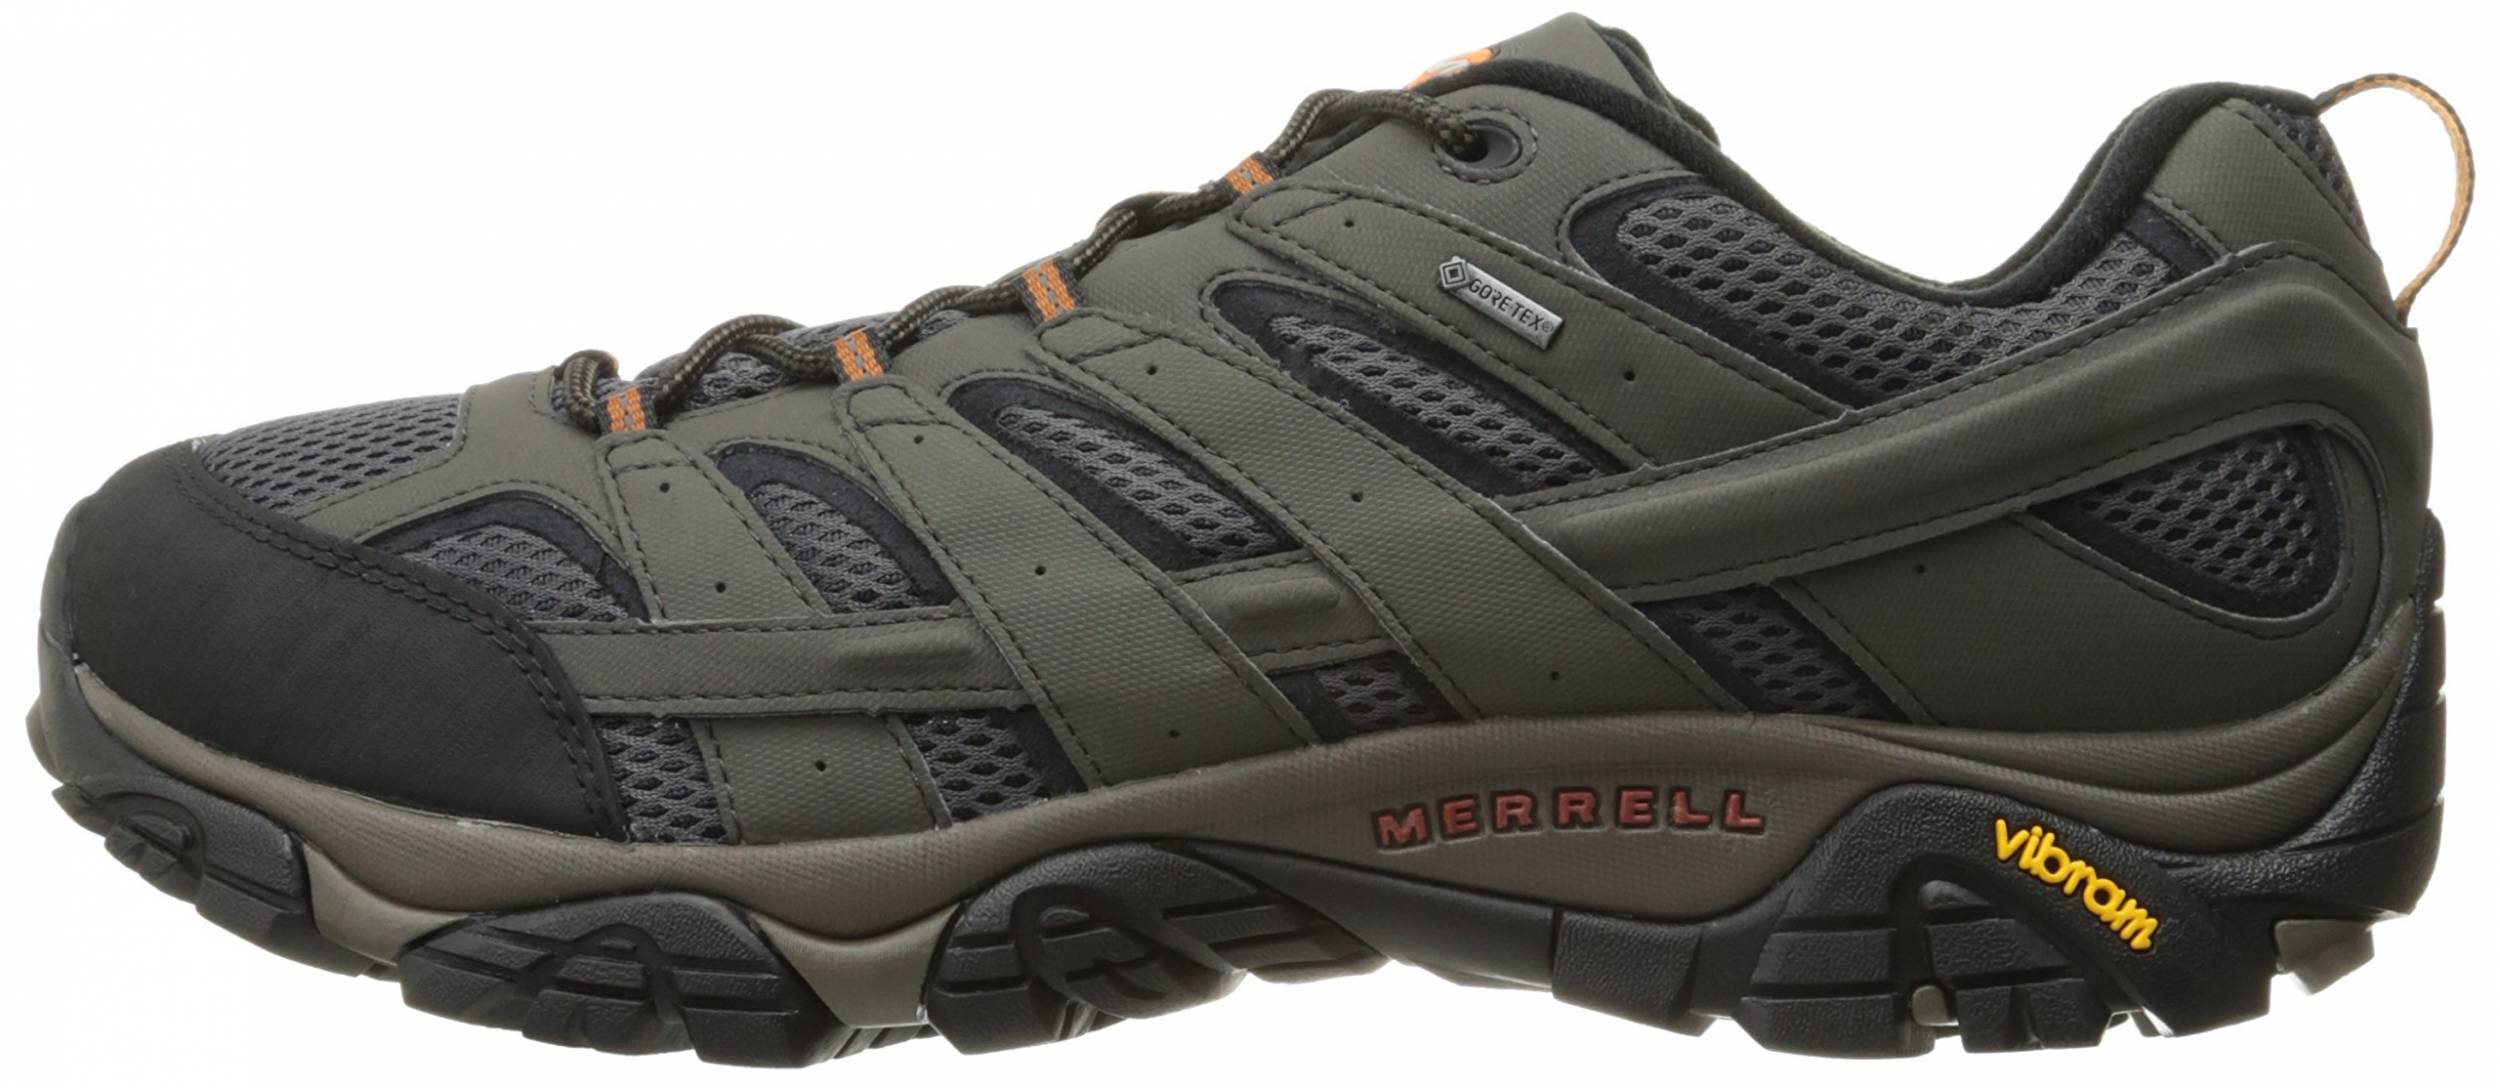 Merrell Moab 2 GTX Gore-Tex Vibram Grey Black Men Outdoors Hiking Shoes J02531 